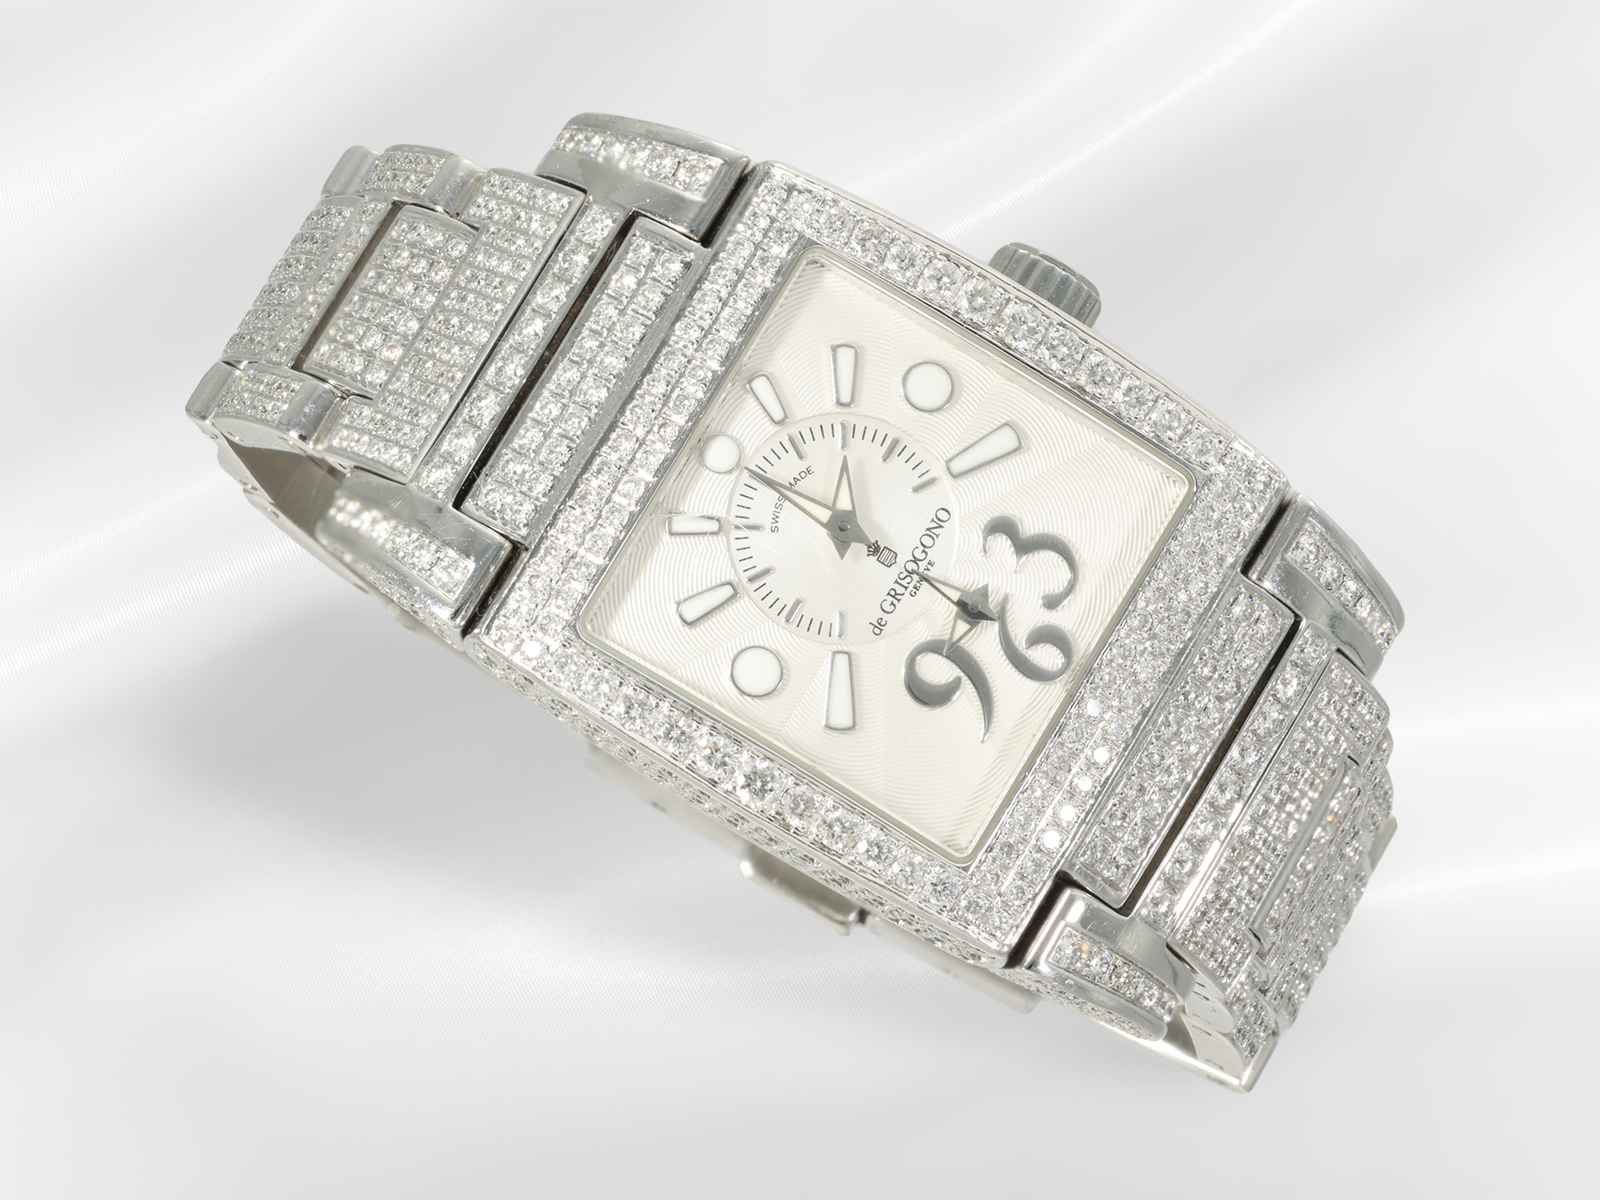 Wristwatch: very high-quality, luxurious men's watch/women's watch, "Instrumentino by Grisogno Genev